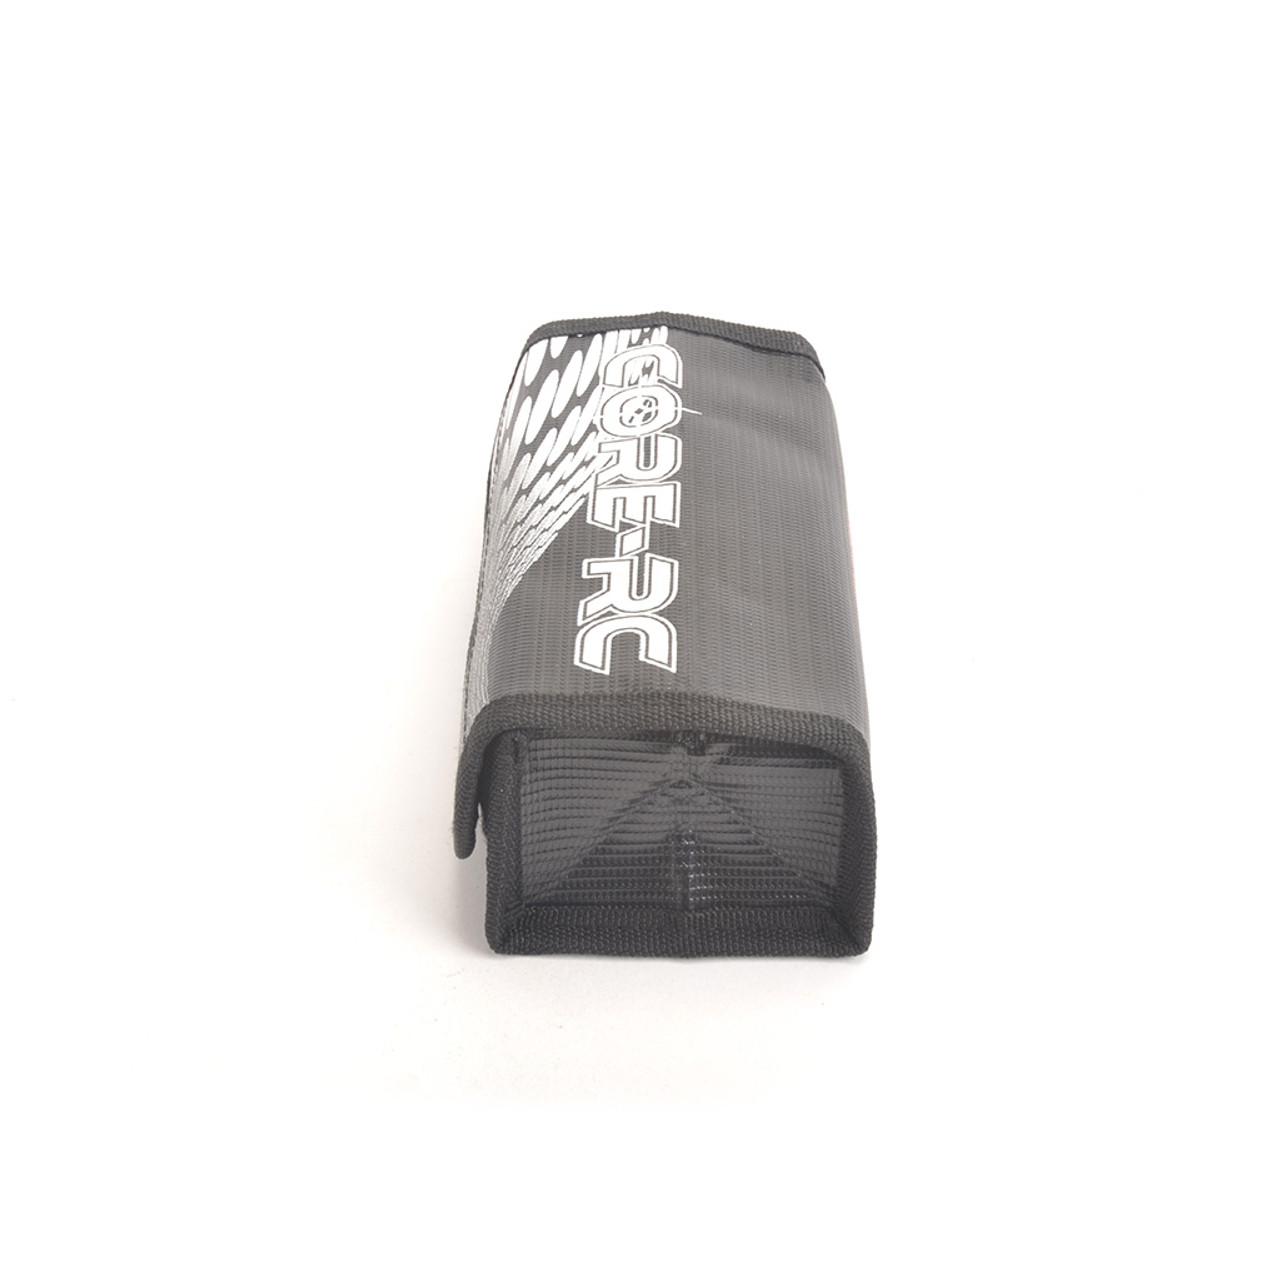 Core RC Lipo Locker Storage/Charging Bag